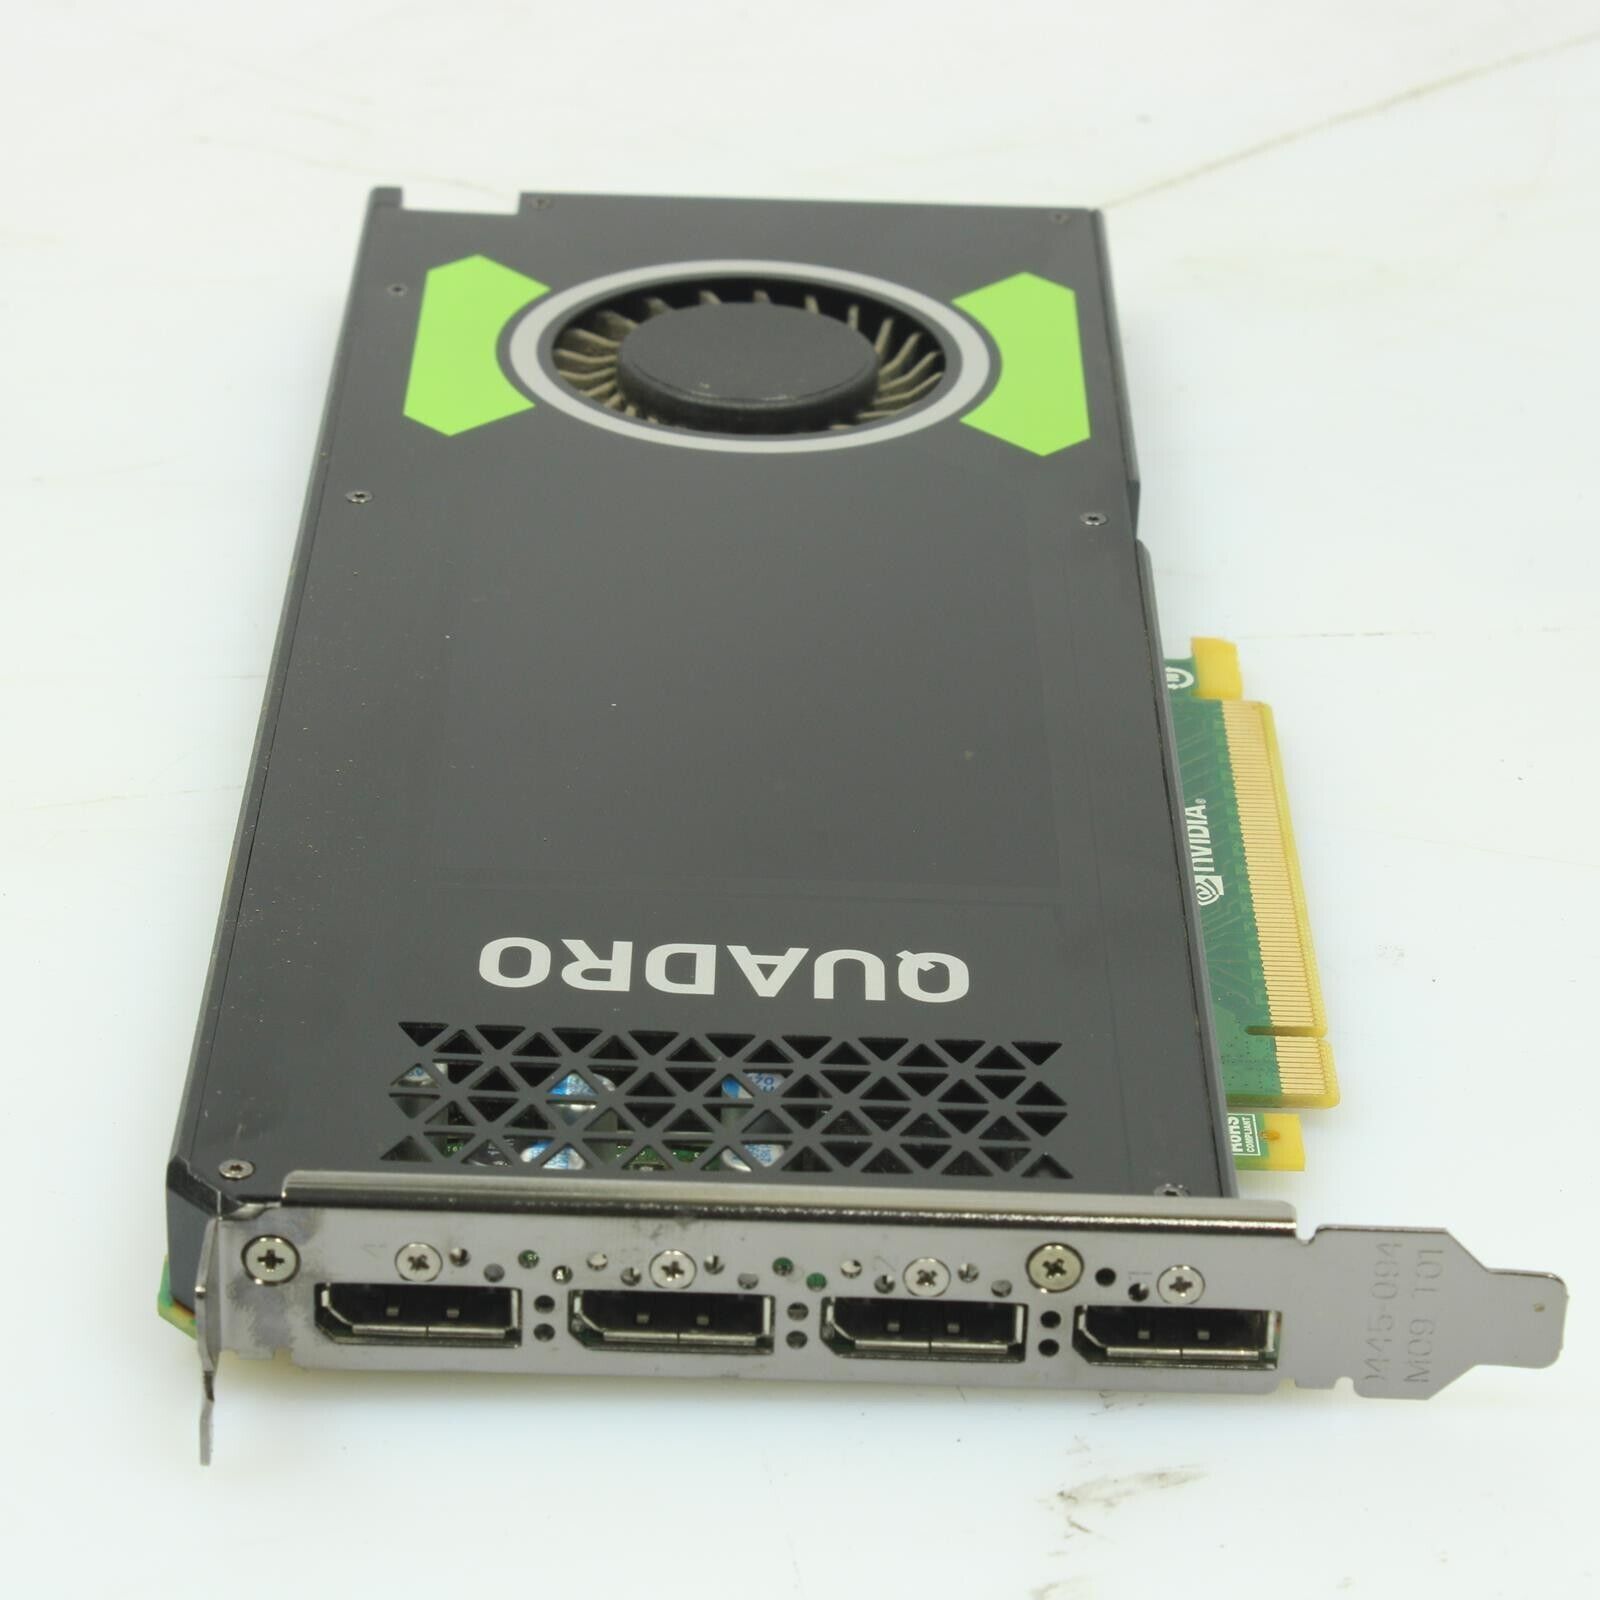 NVIDIA Quadro P4000 8GB GDDR5 Graphics Card - 0GN4T7